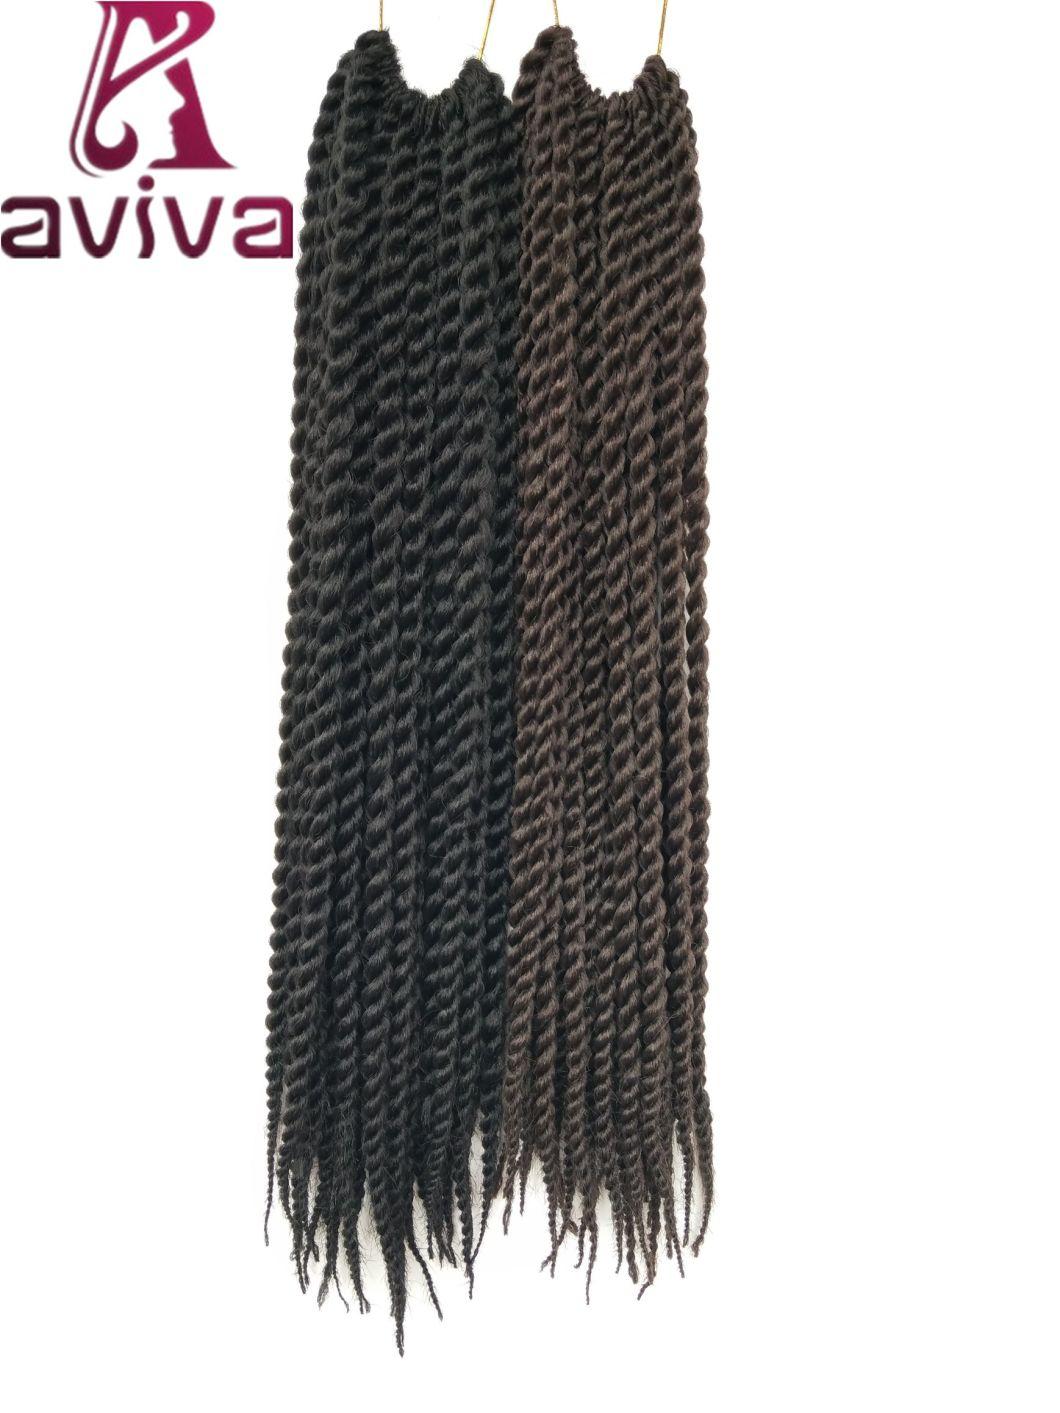 24" Synthetic Hair Kanekalon Twist Braiding Hair Extensions 22strands/Piece #1b Flame Resistant Crochet Hair Braids